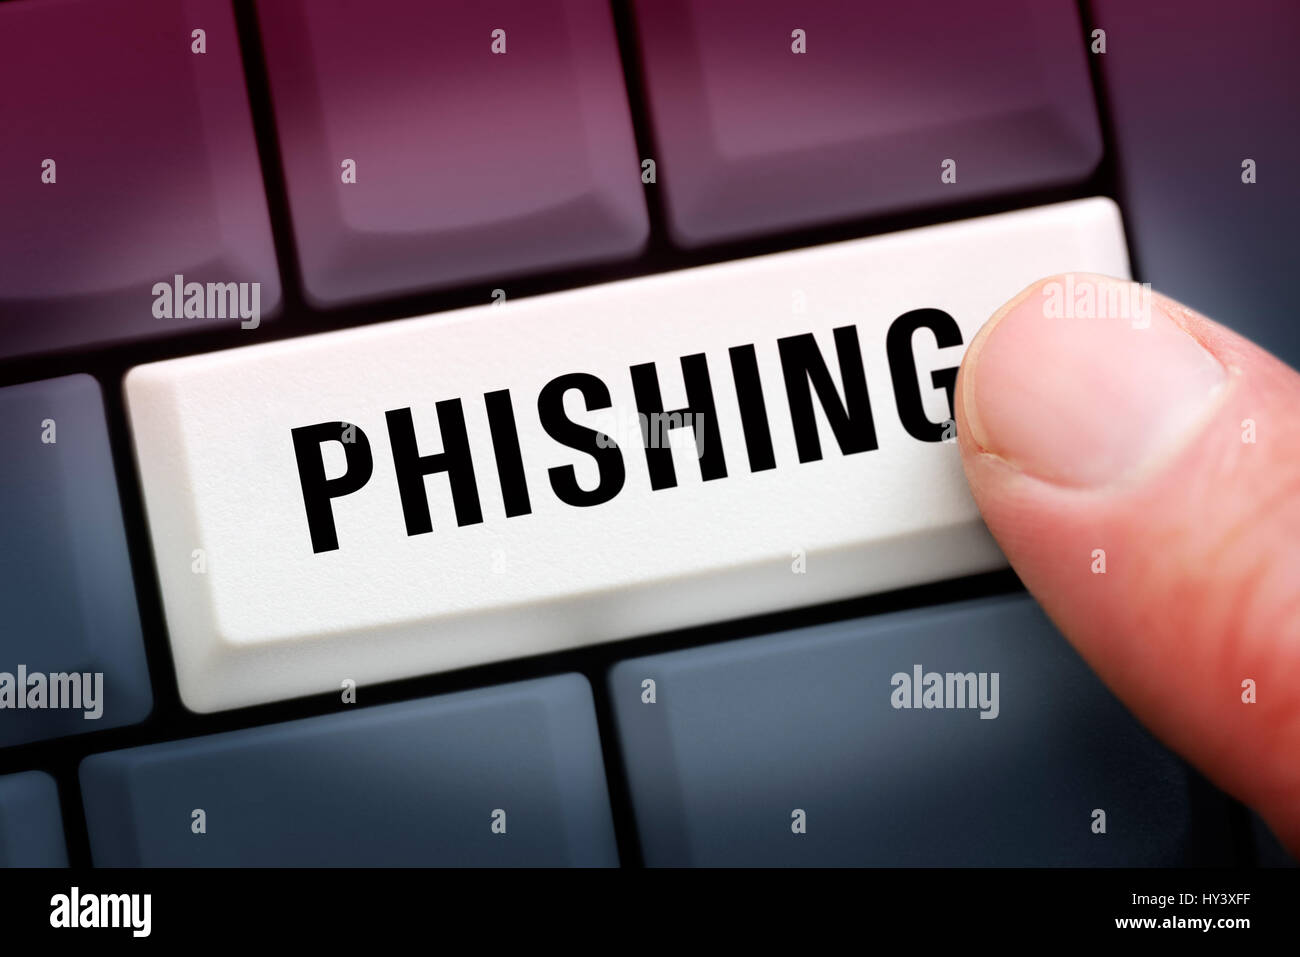 Chiave del computer con l'etichetta di phishing, Computertaste mit der Aufschrift Phishing Foto Stock